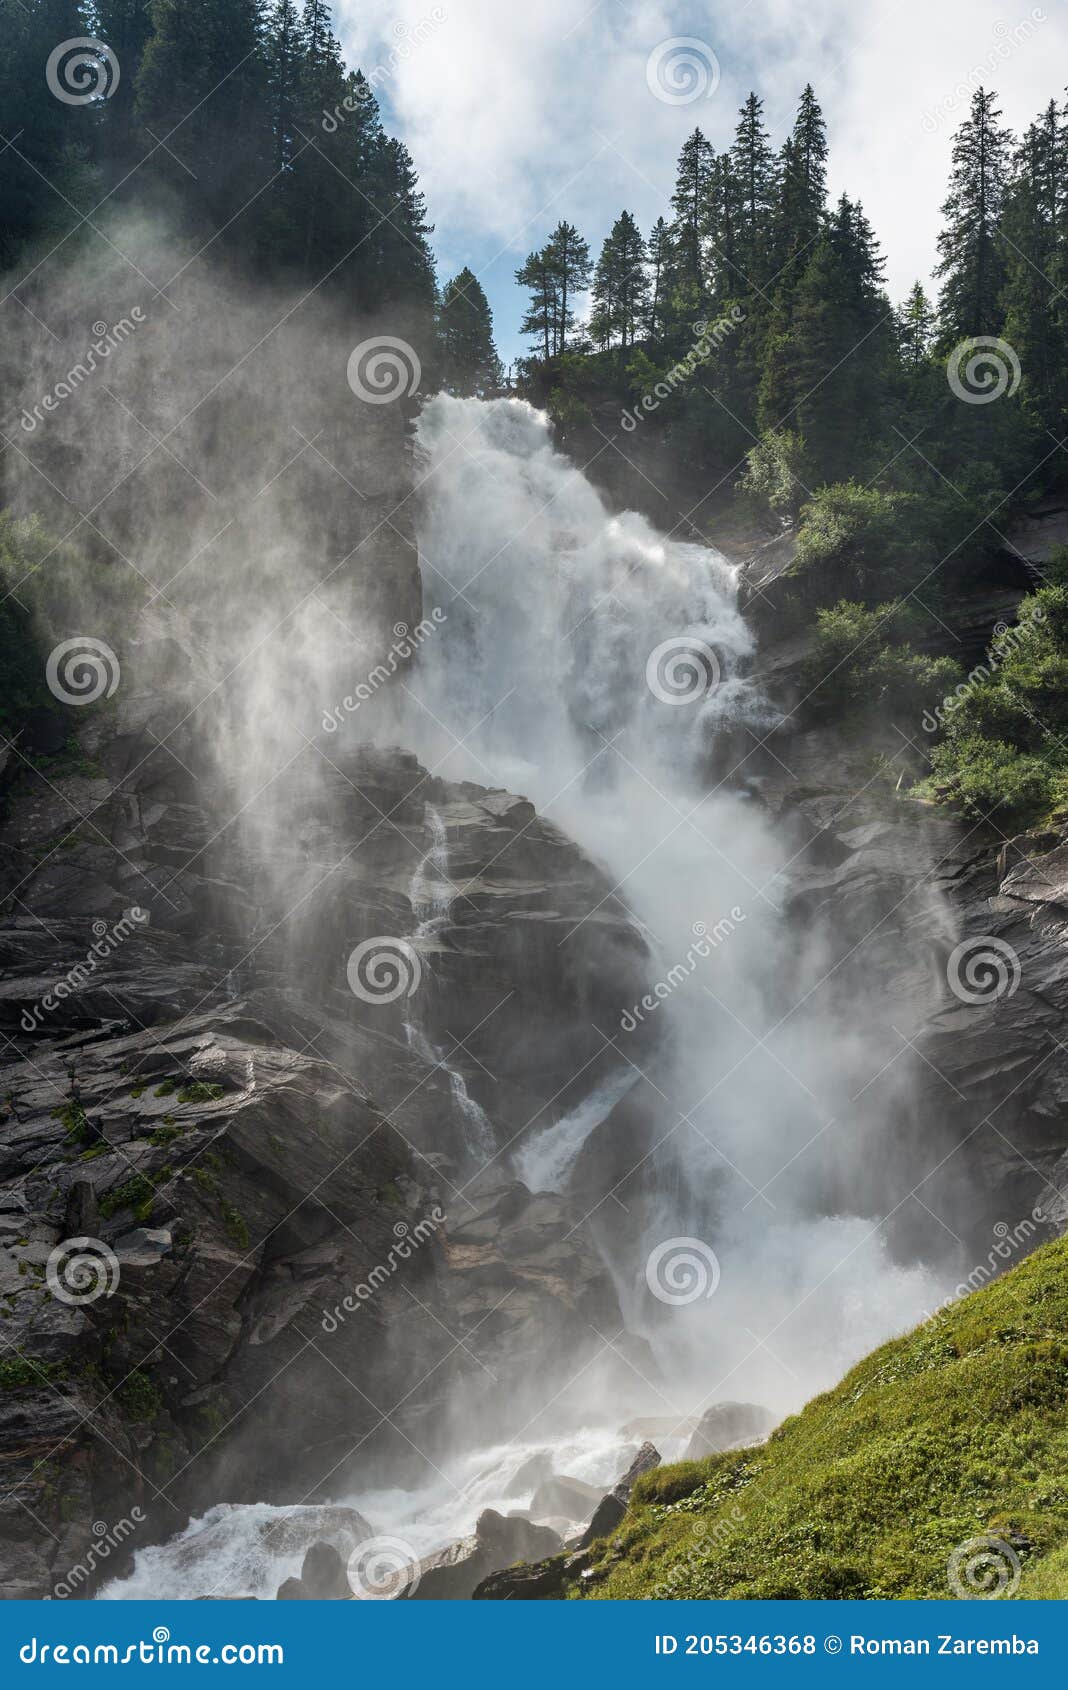 upper part of the krimml waterfalls, highest waterfall in austria